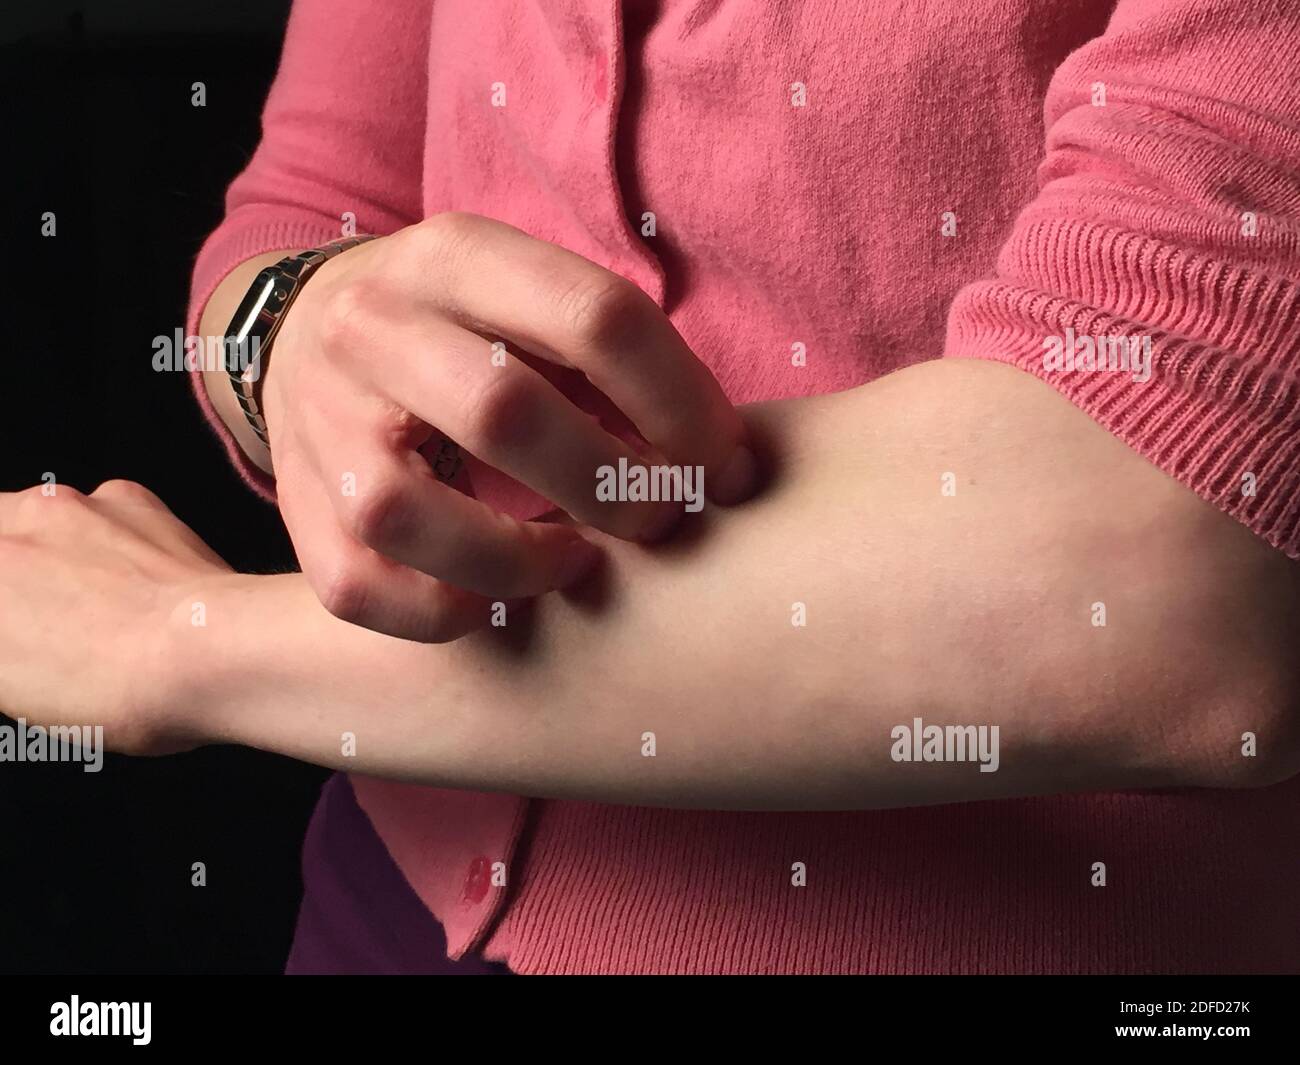 Woman scratching skin Stock Photo